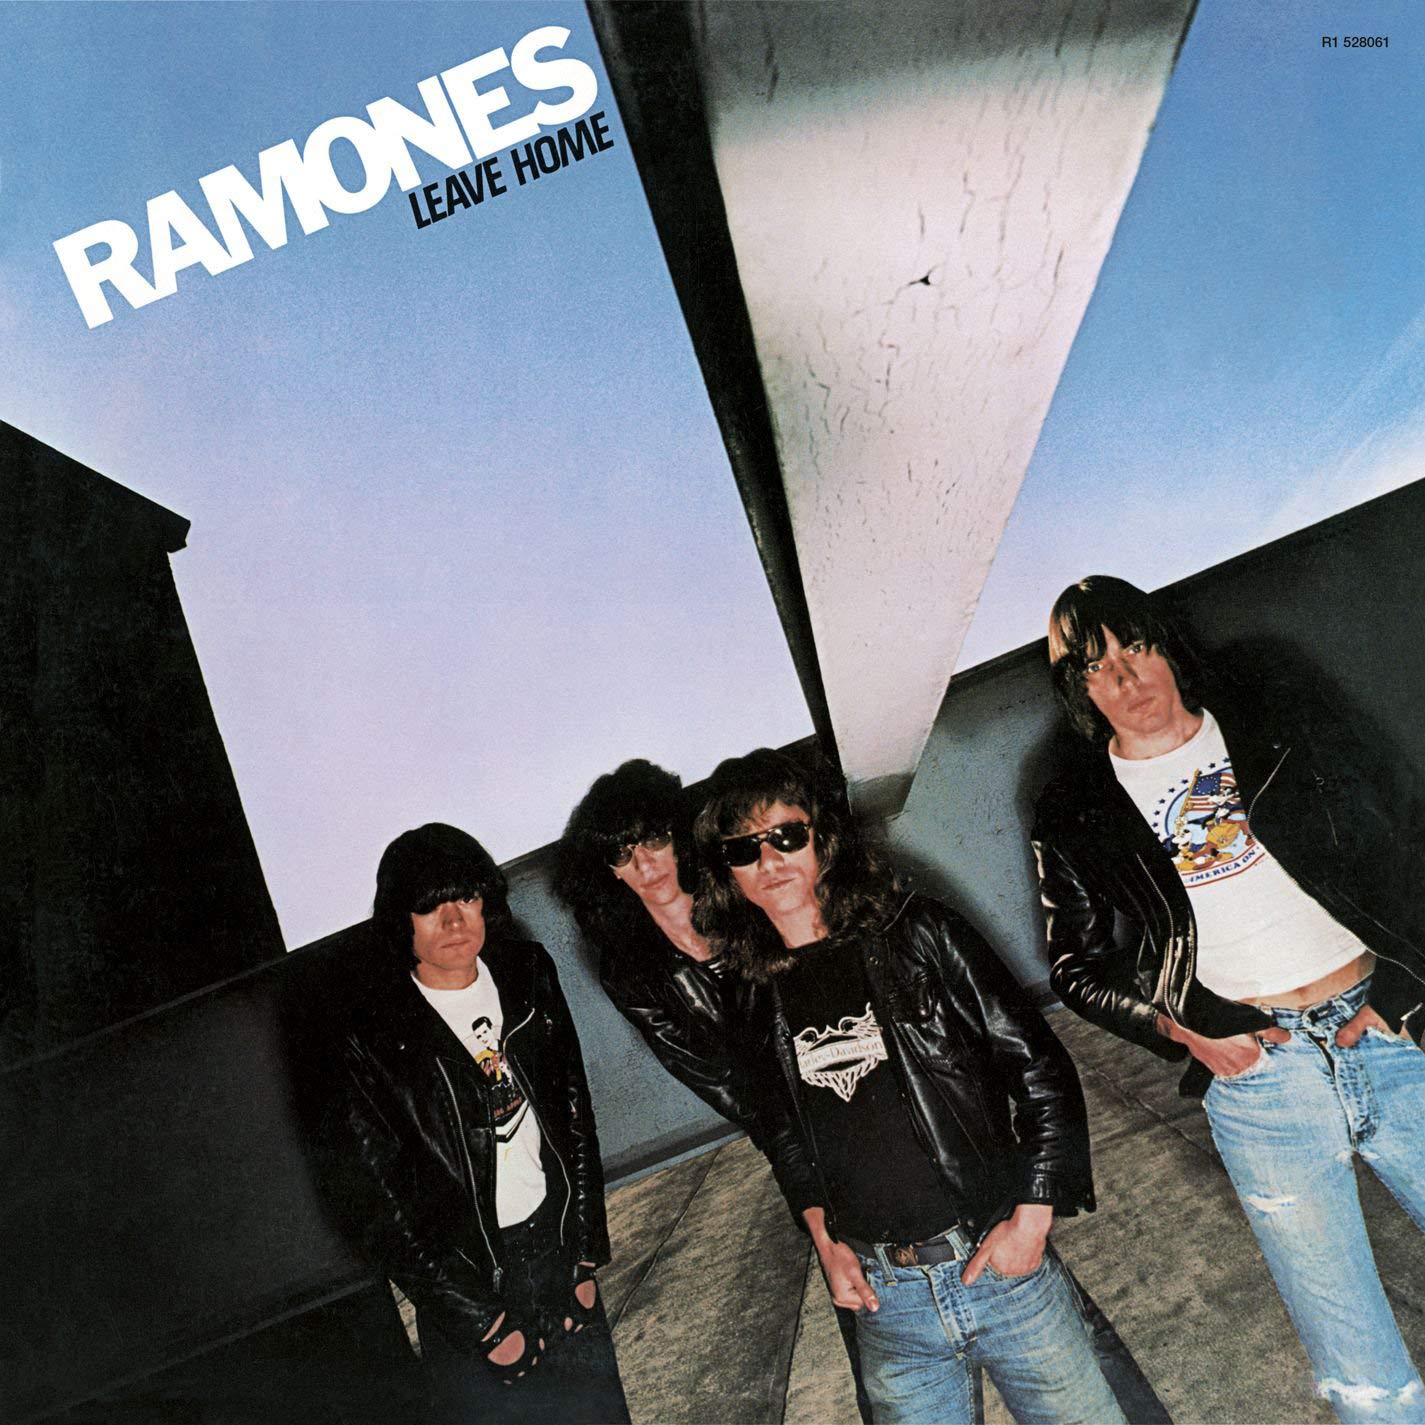 Ramones "Leave Home" LP